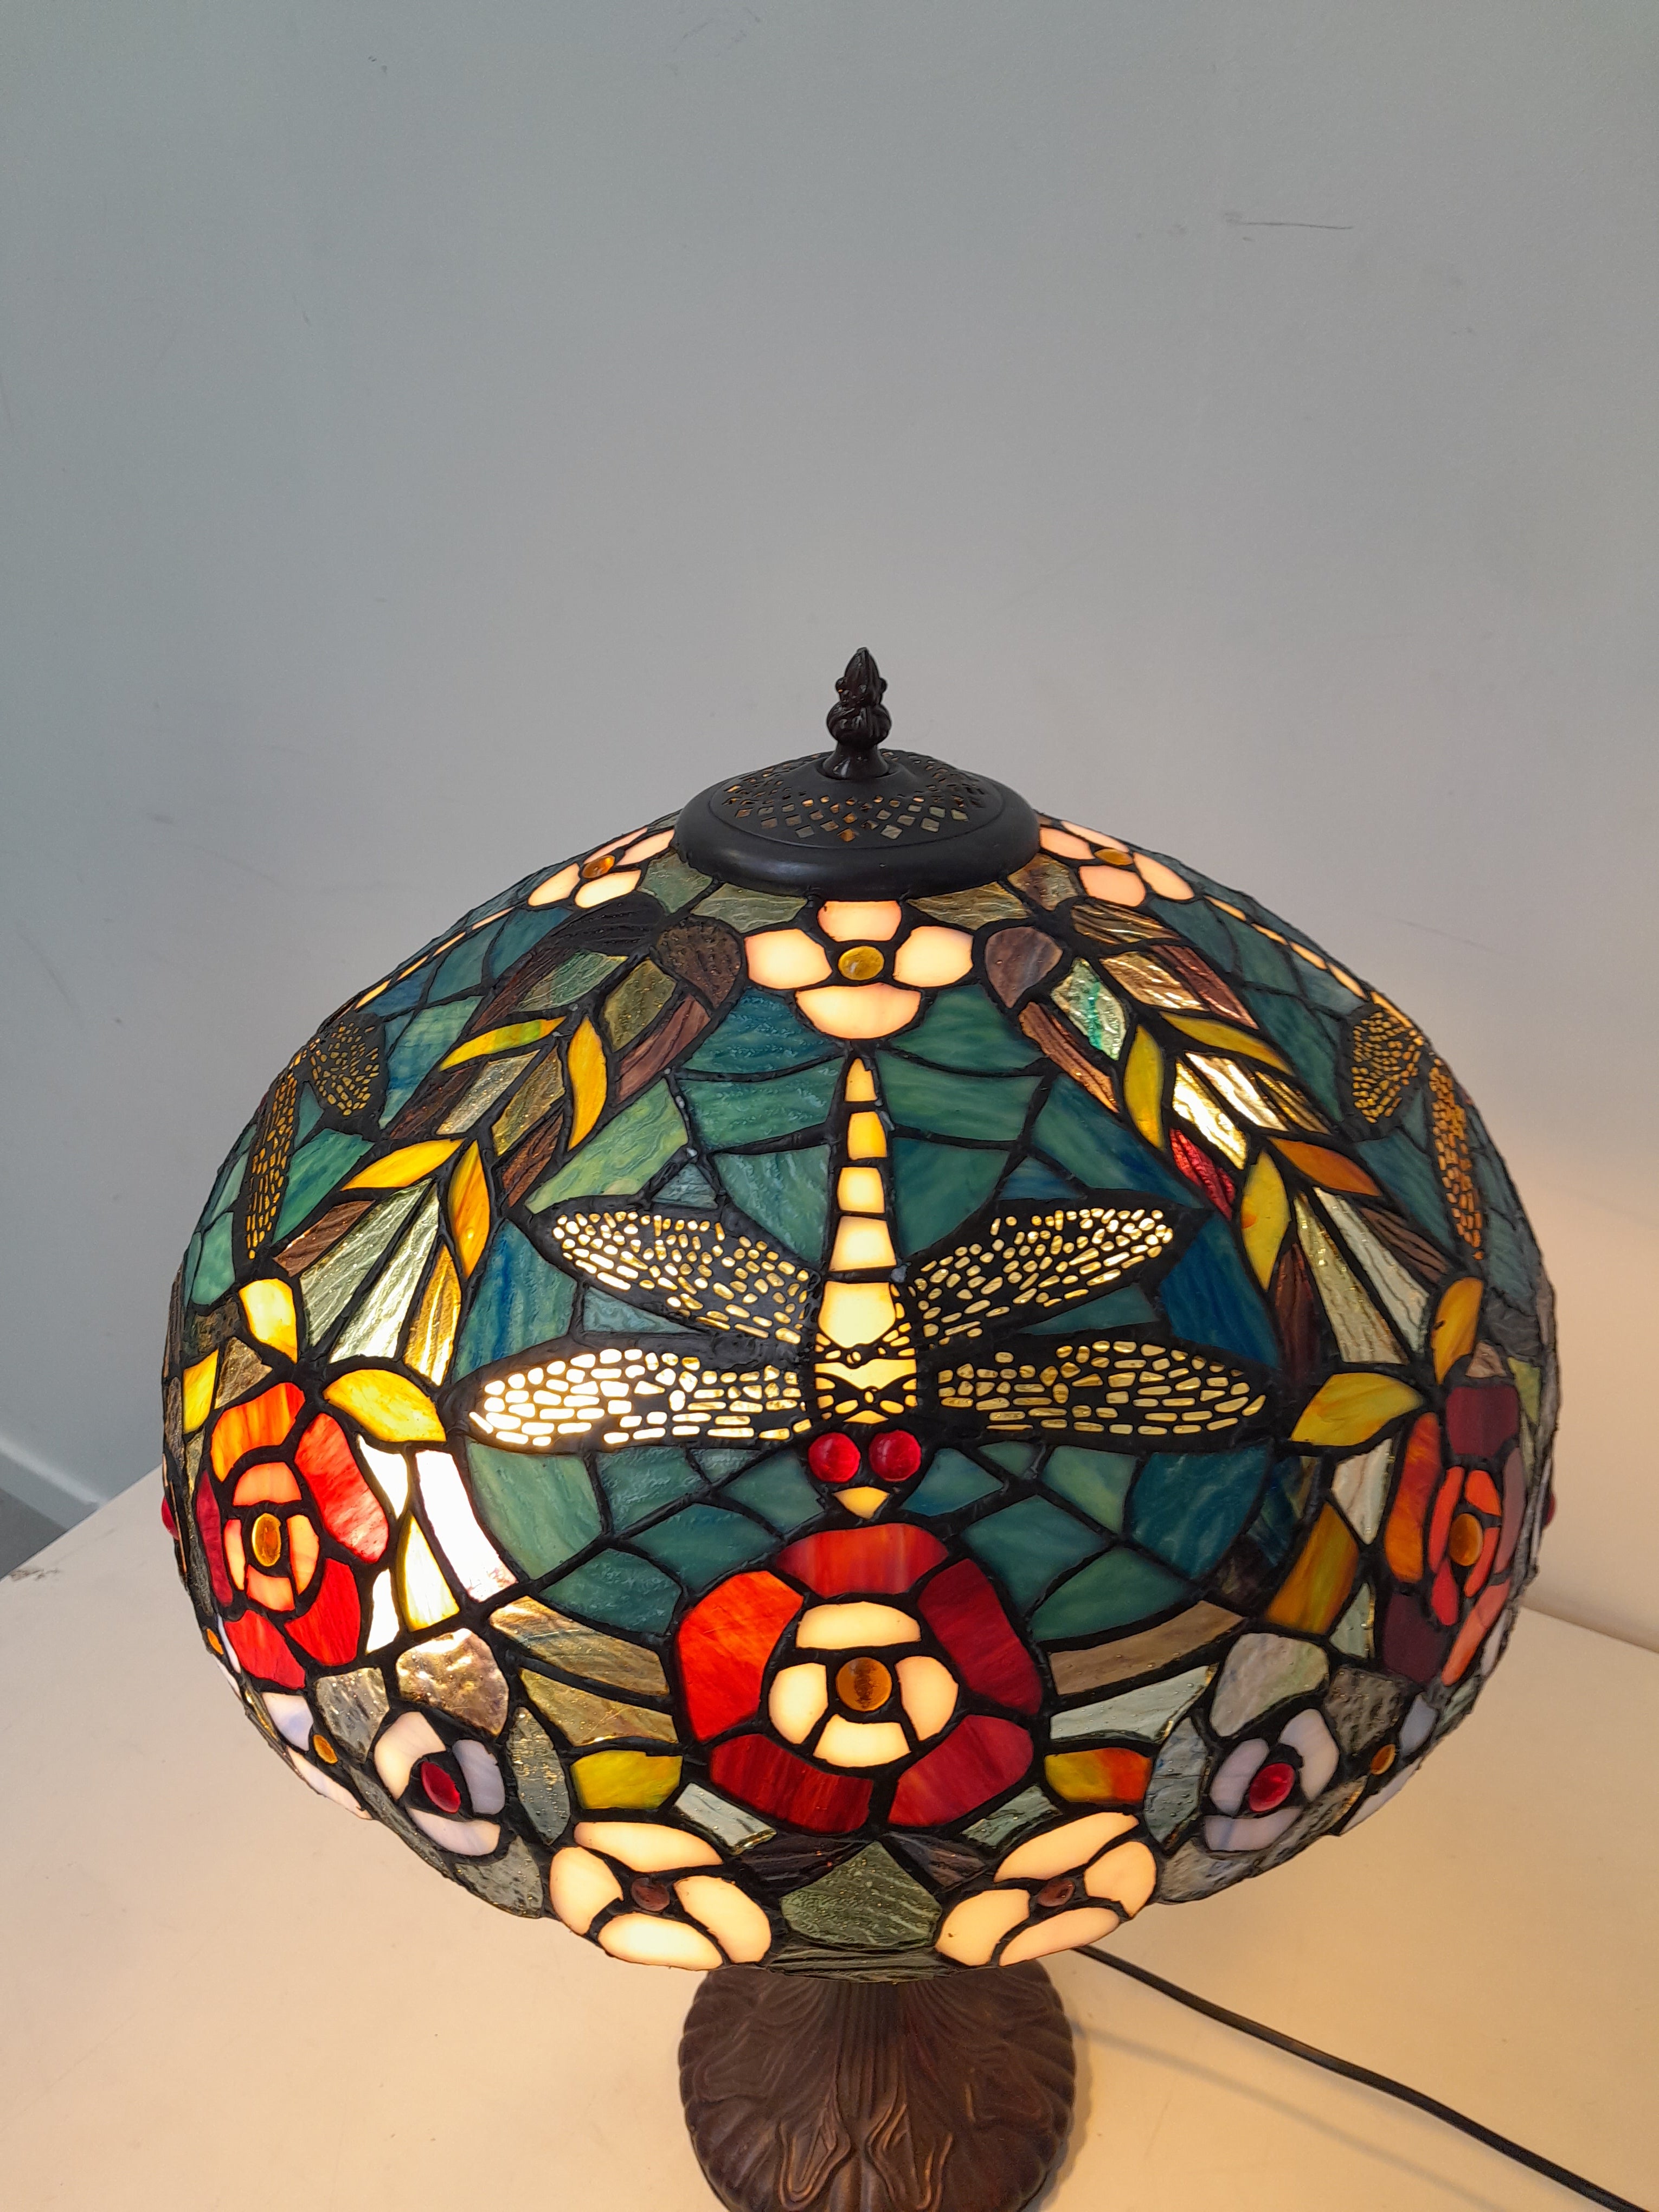 Tiffany style lamp - Dragonfly